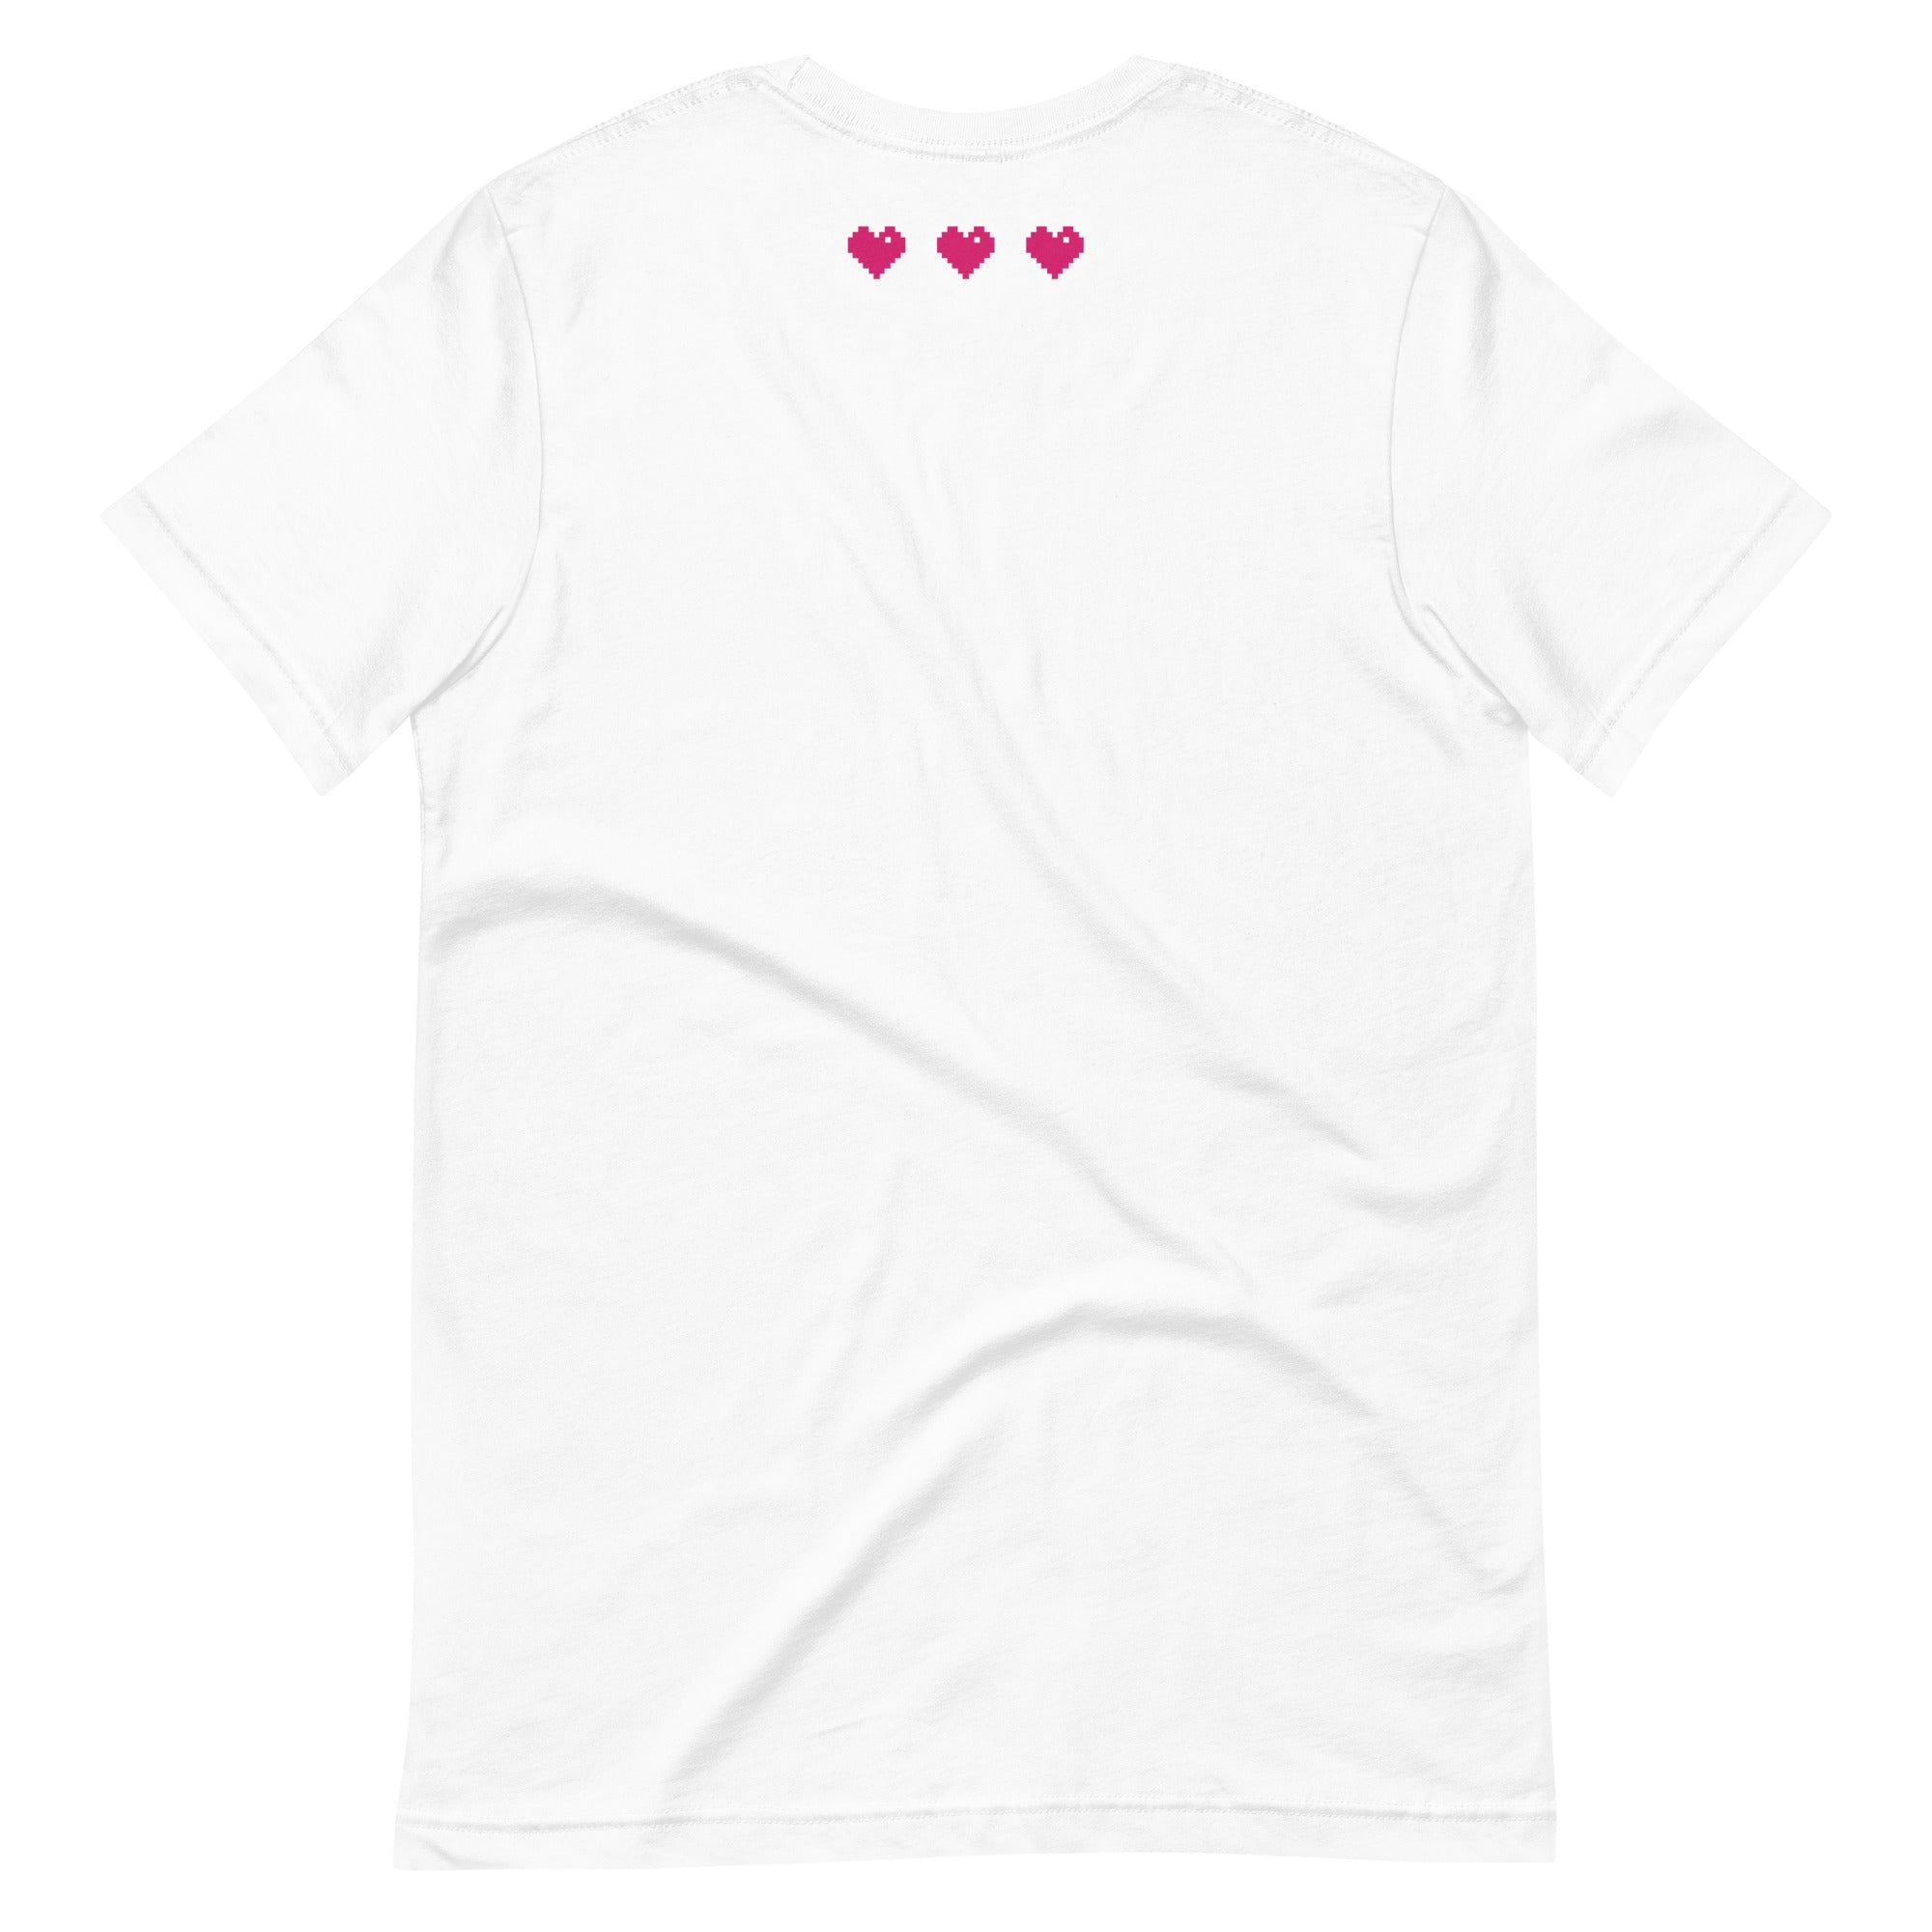 171 Ways to Have Fun Unisex t-shirt